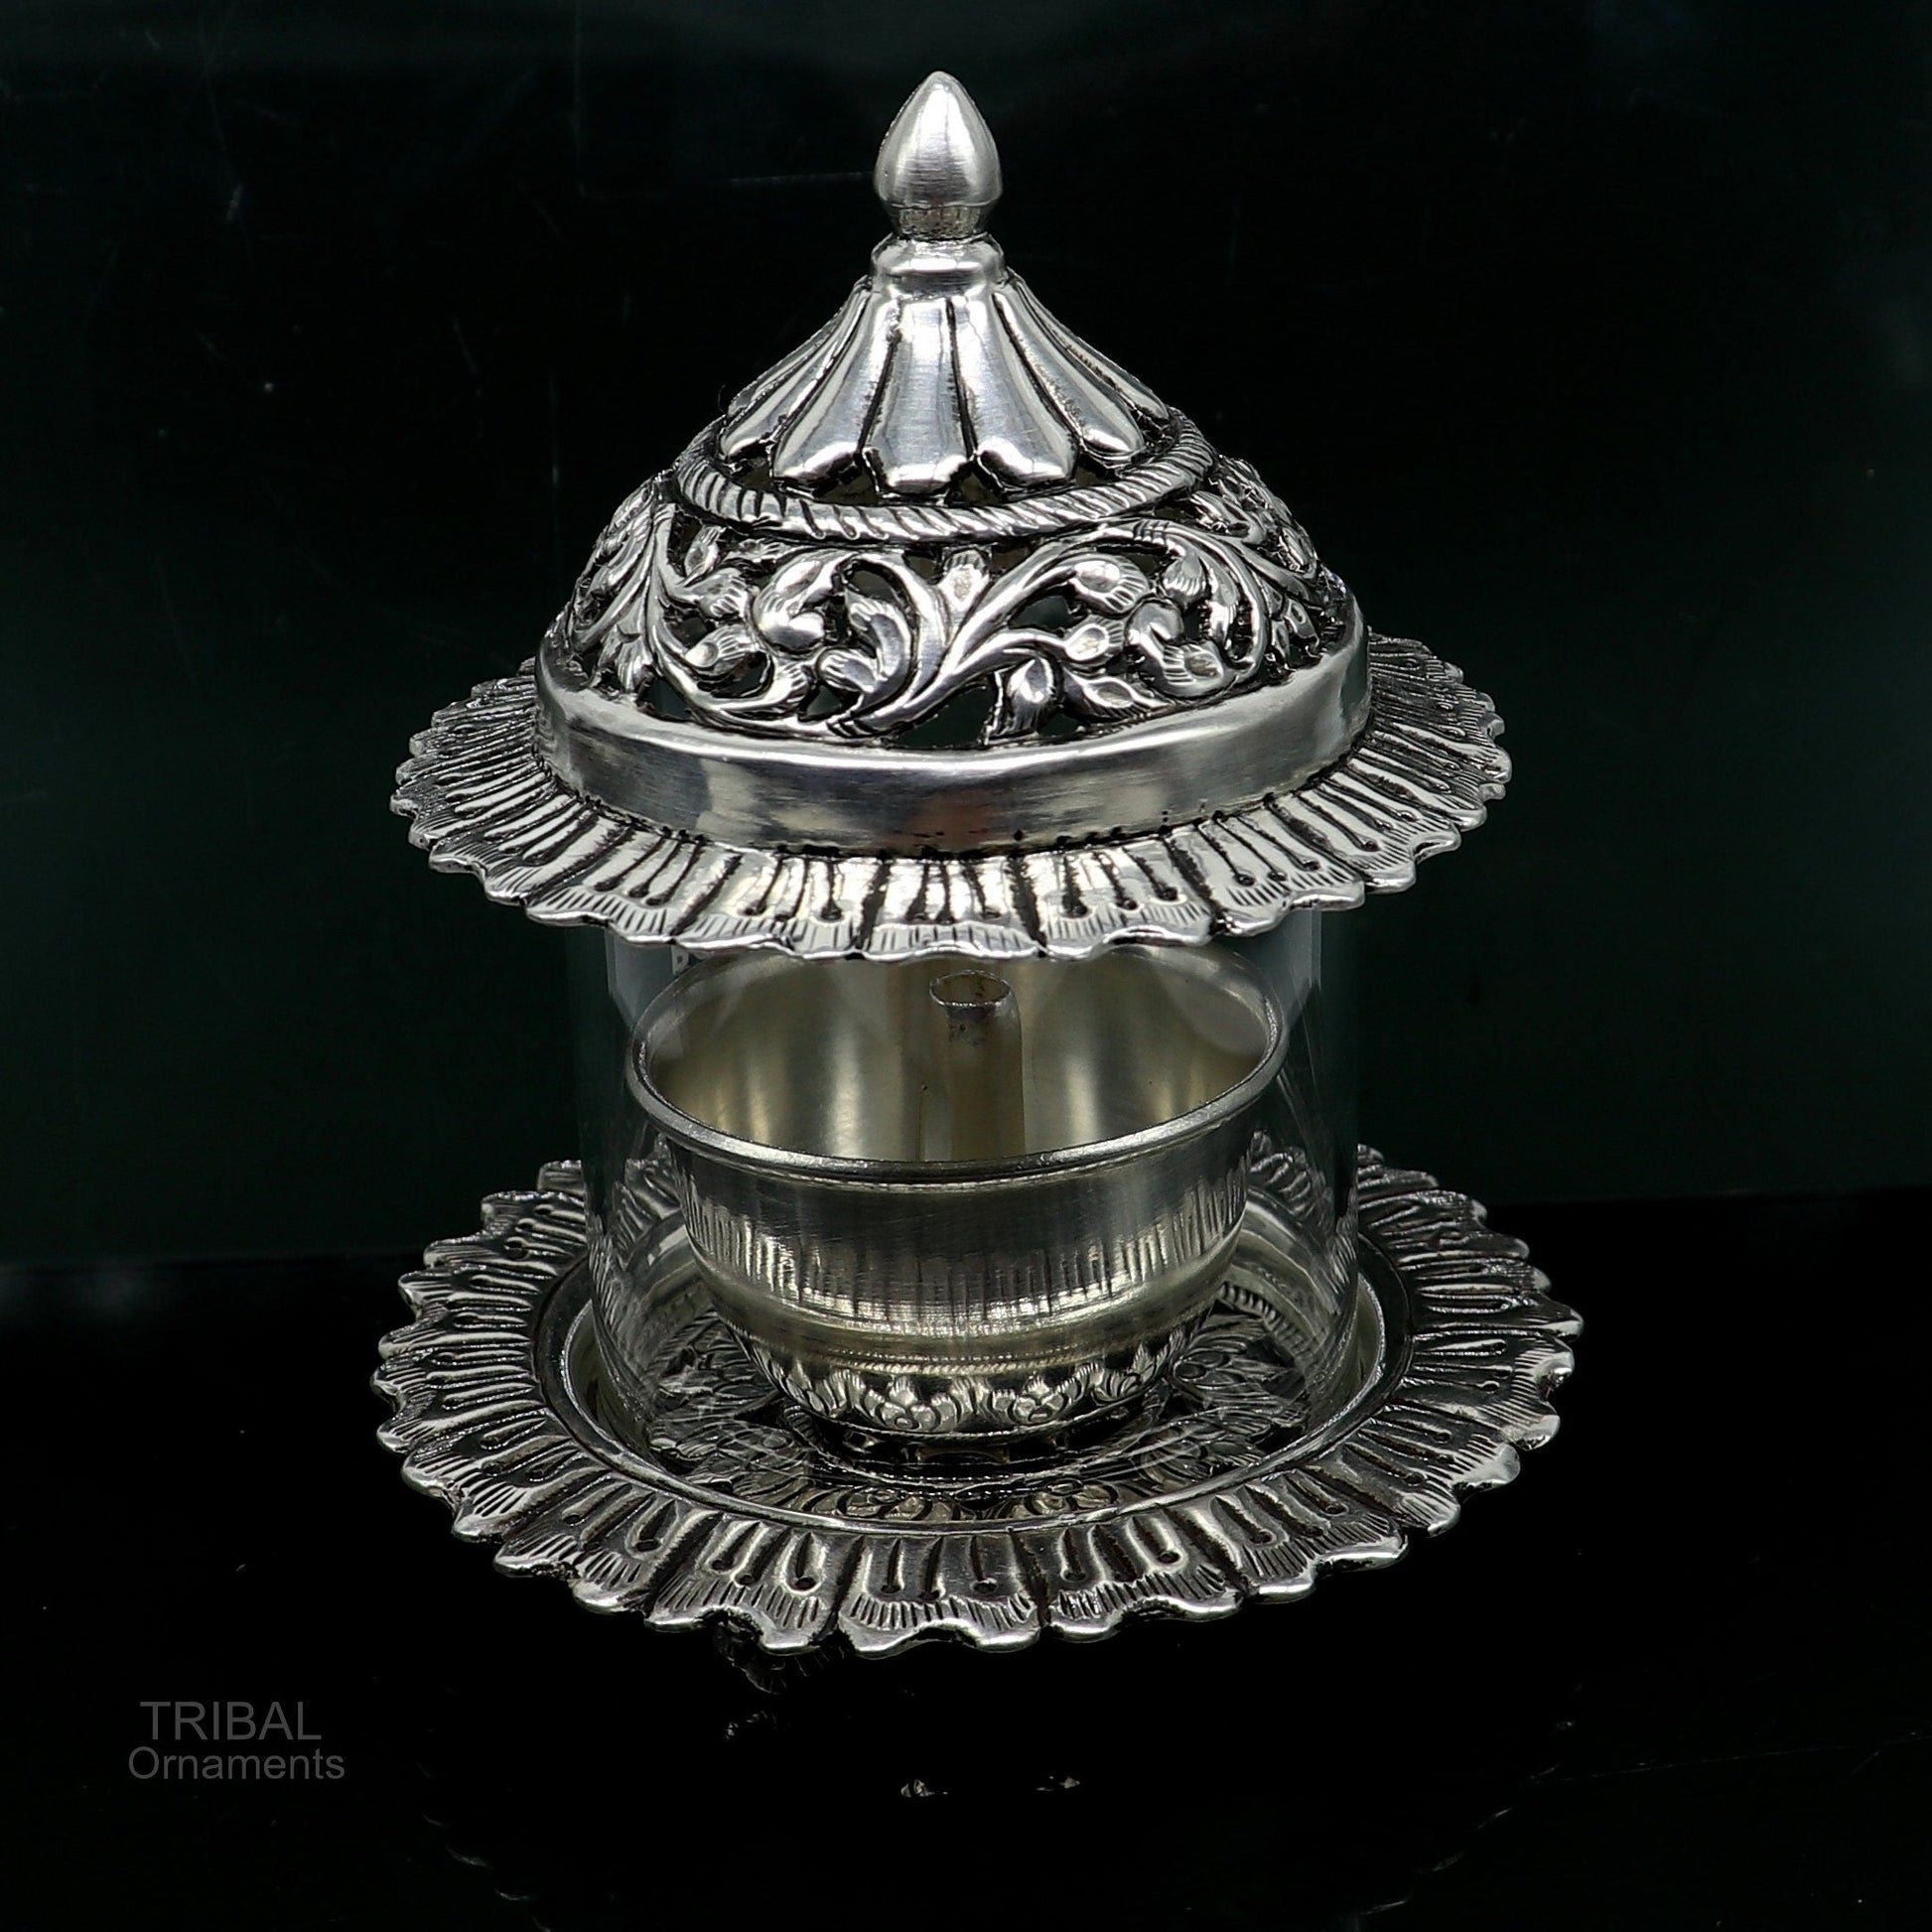 925 sterling silver handcrafted vintage design oil lamp/Deepak, silver article, puja utensils, silver figurine best decorative article su595 - TRIBAL ORNAMENTS